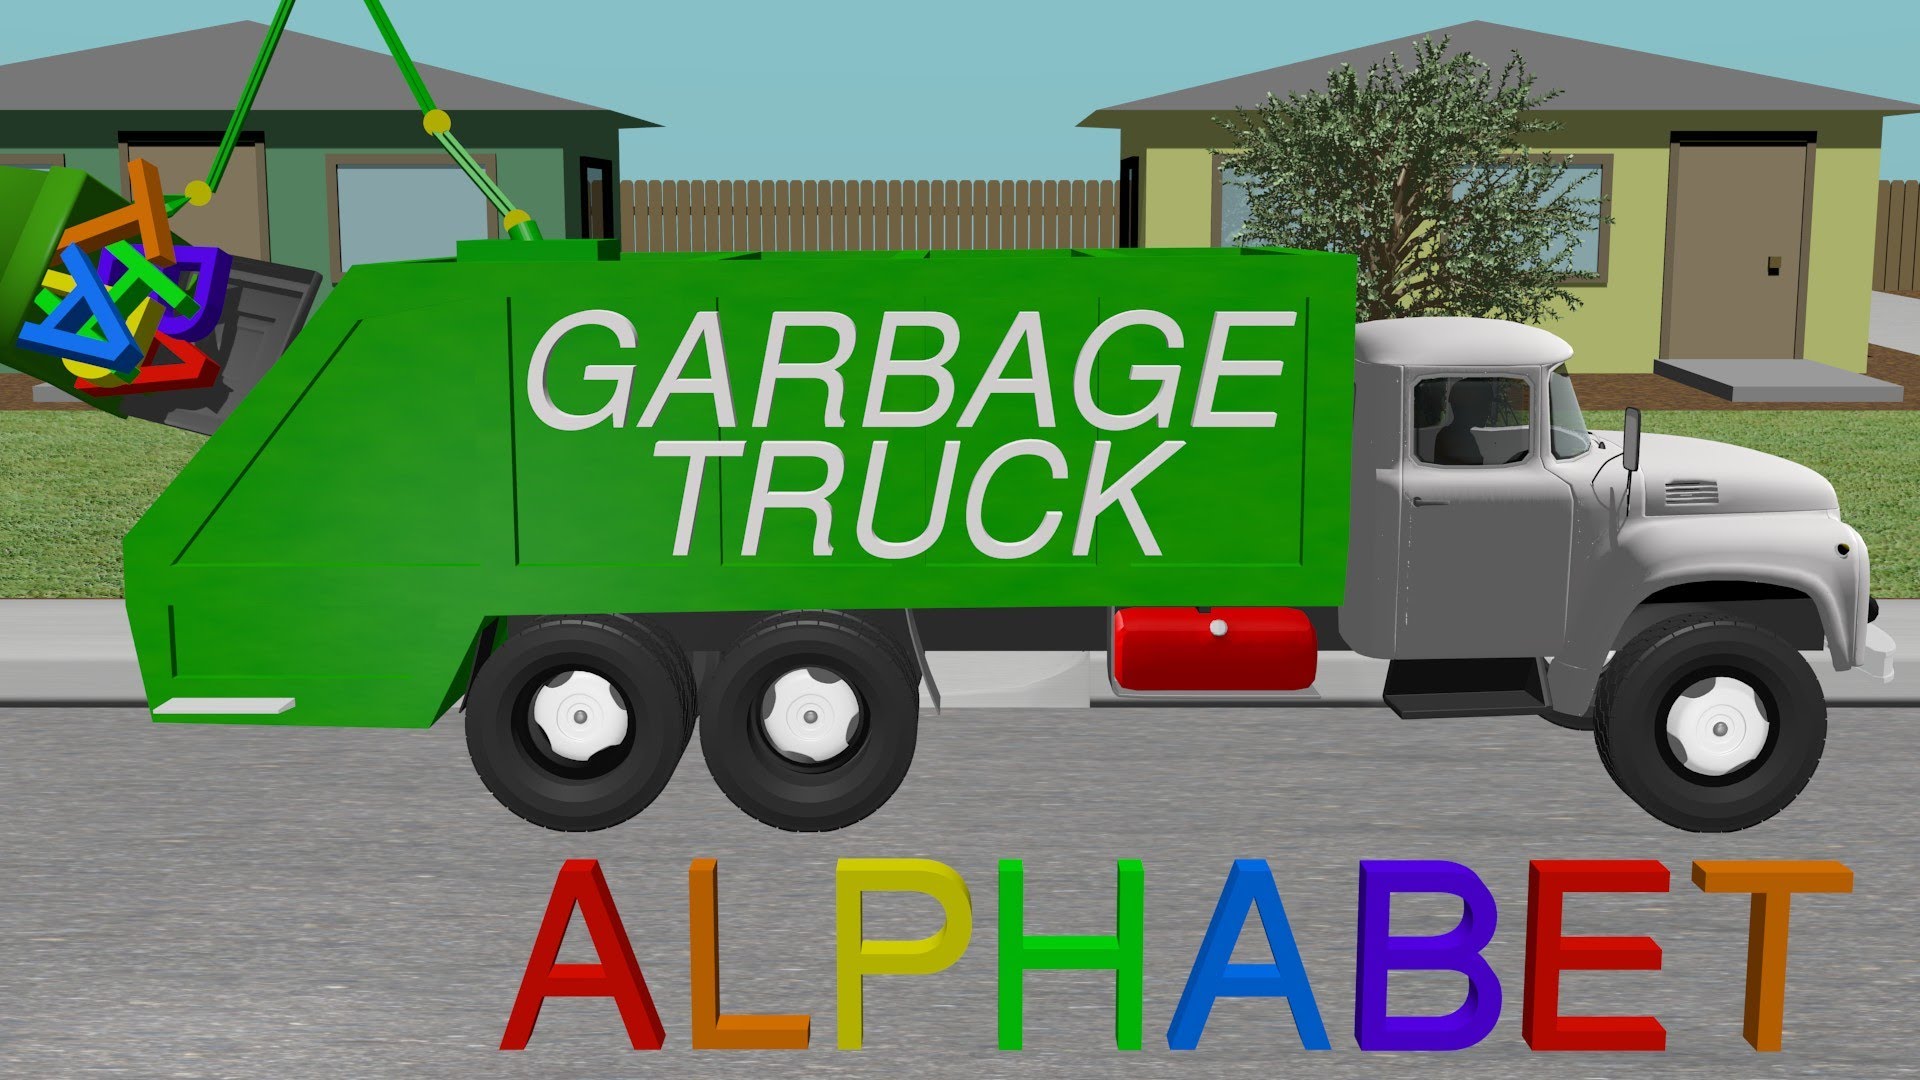 Alphabet Garbage Truck - Learning for Kids - YouTube